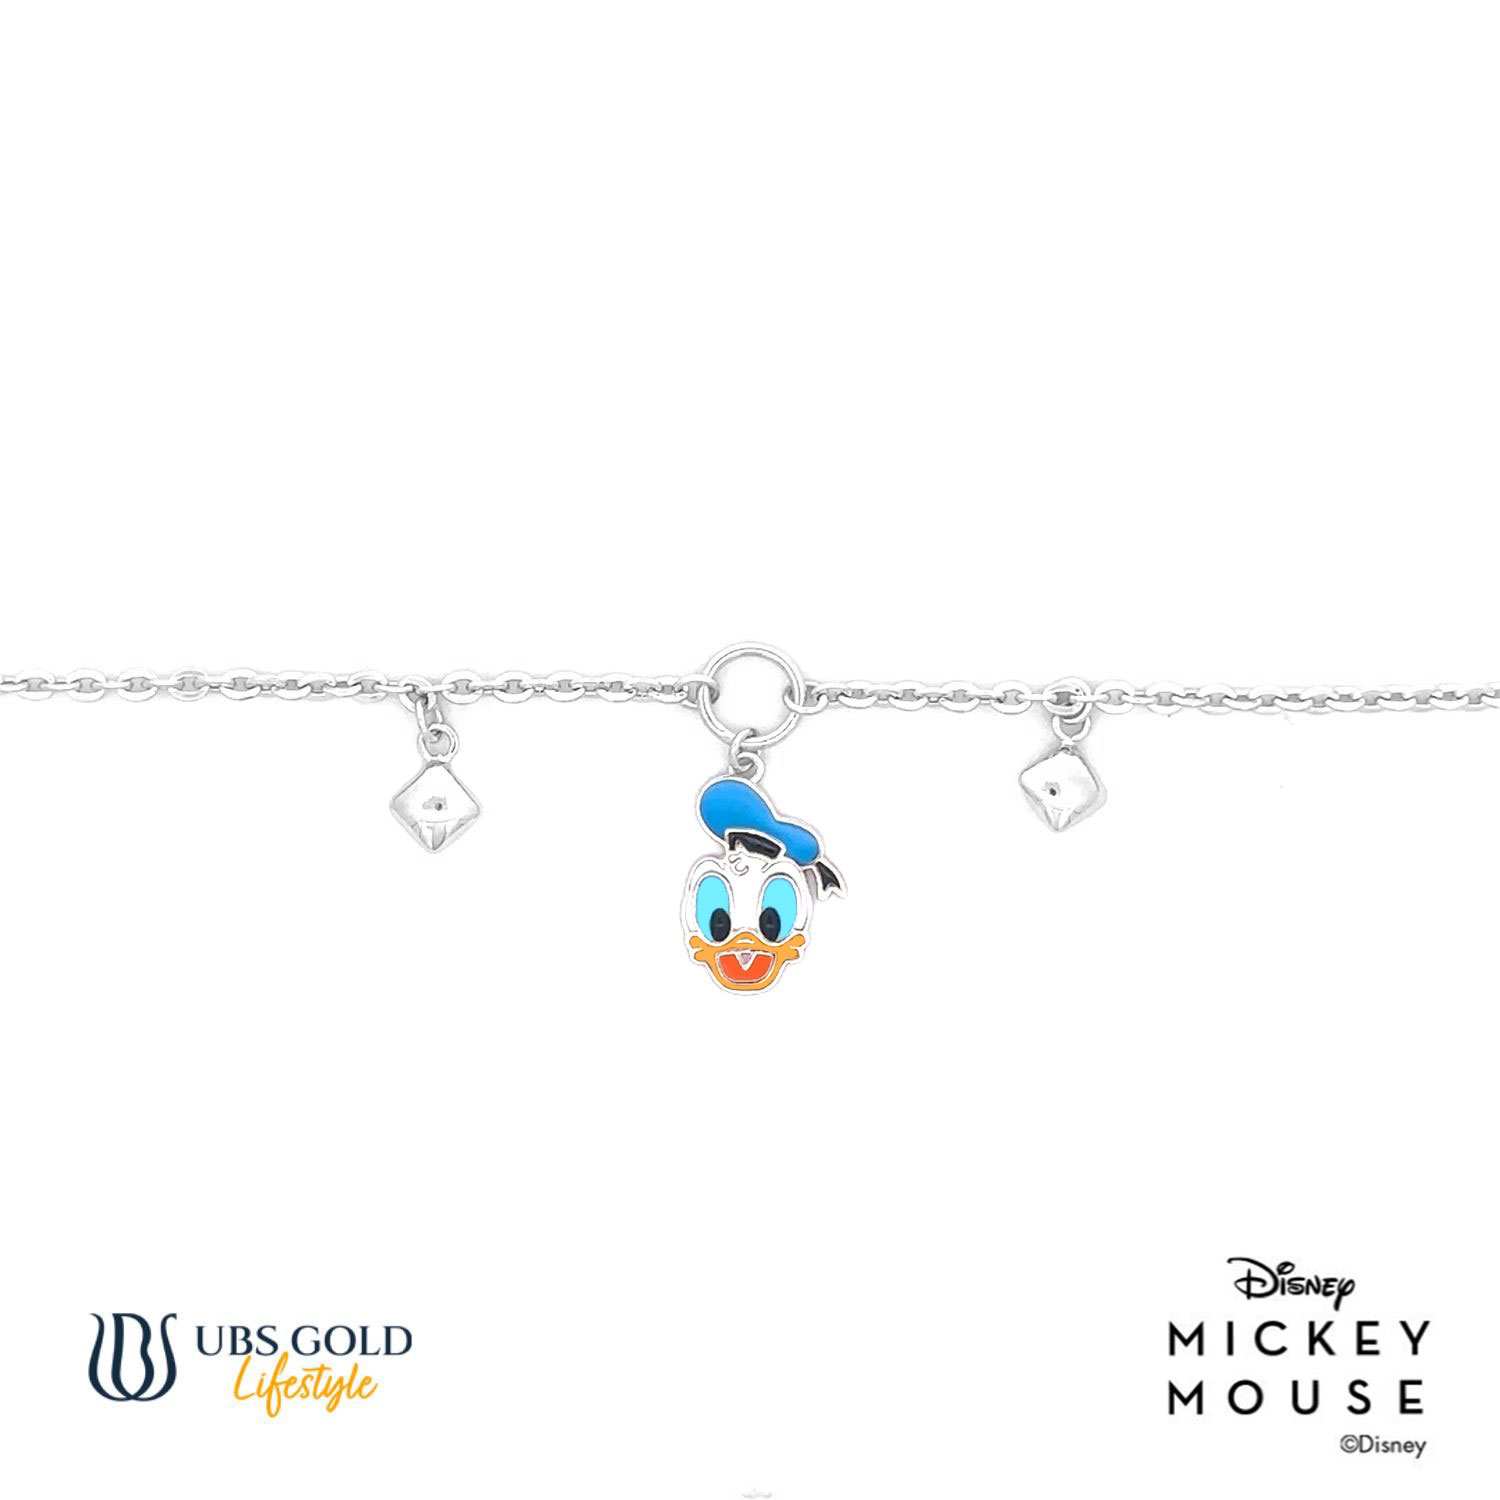 UBS Gelang Emas Anak Disney Donald Duck - Hgy0118 - 17K